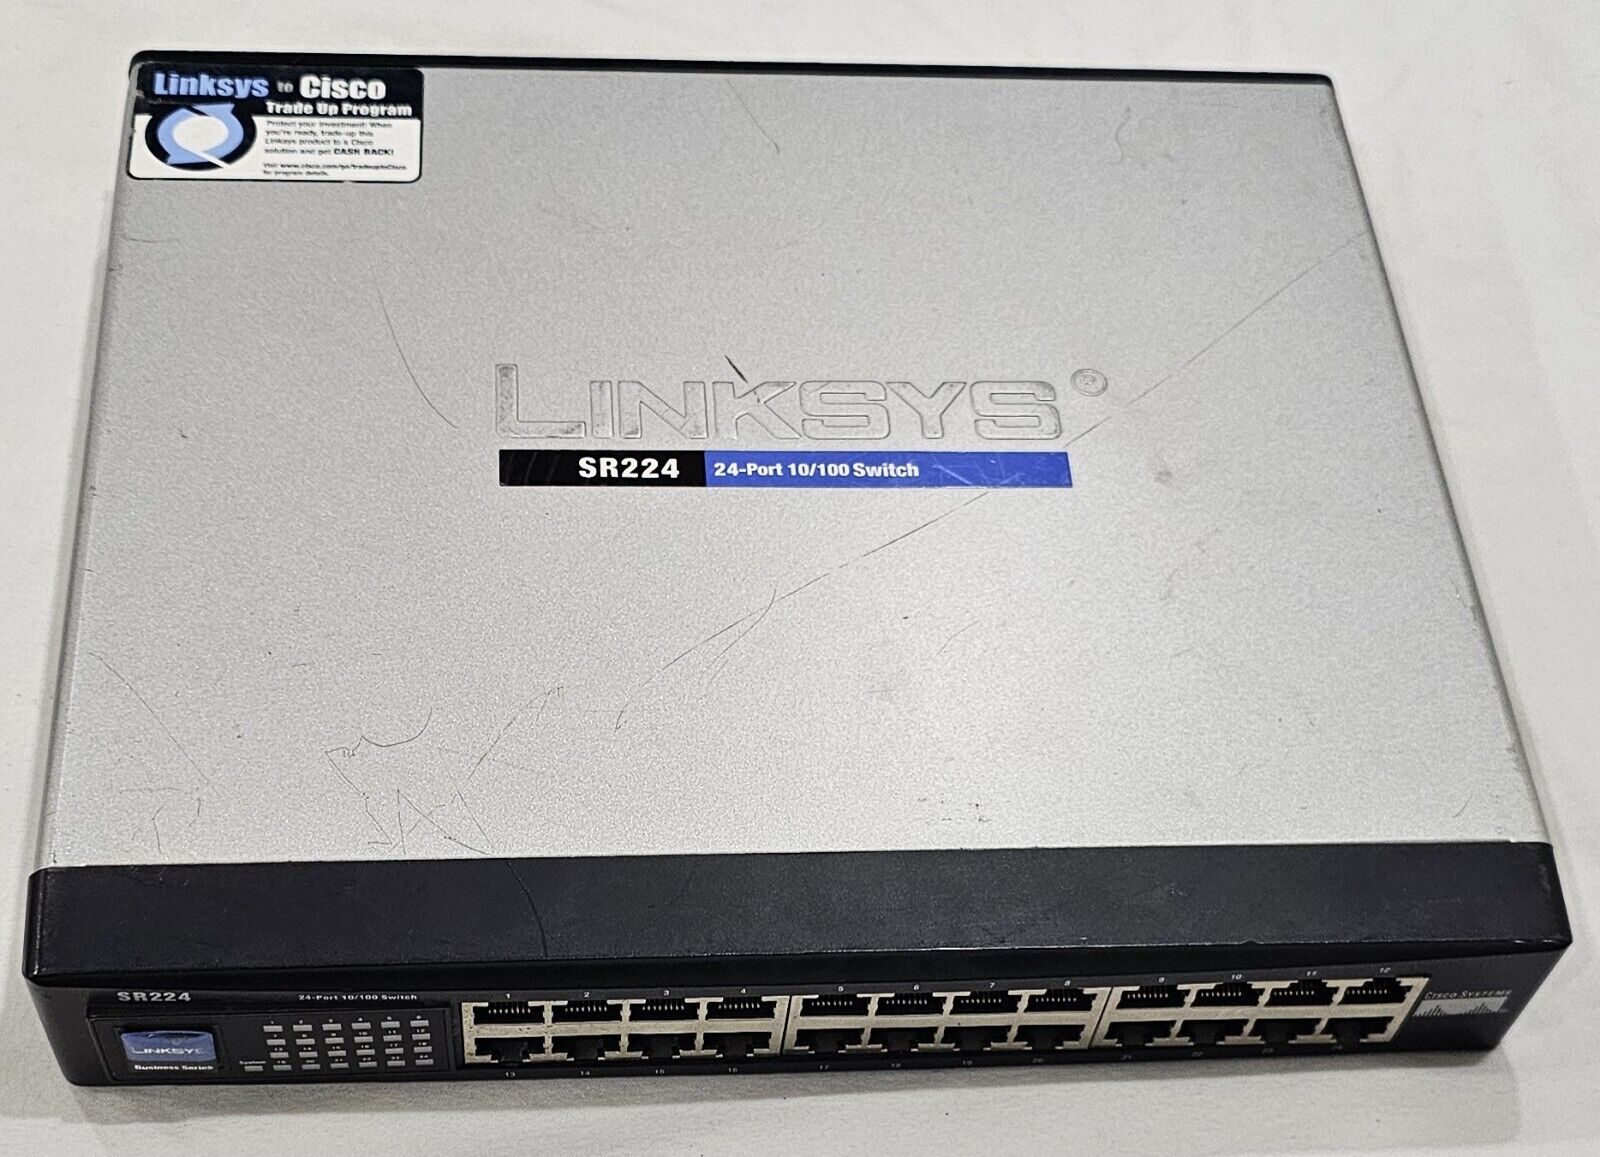 CISCO LINKSYS SR224 24-Port 10/100 Network Switch WORKING 